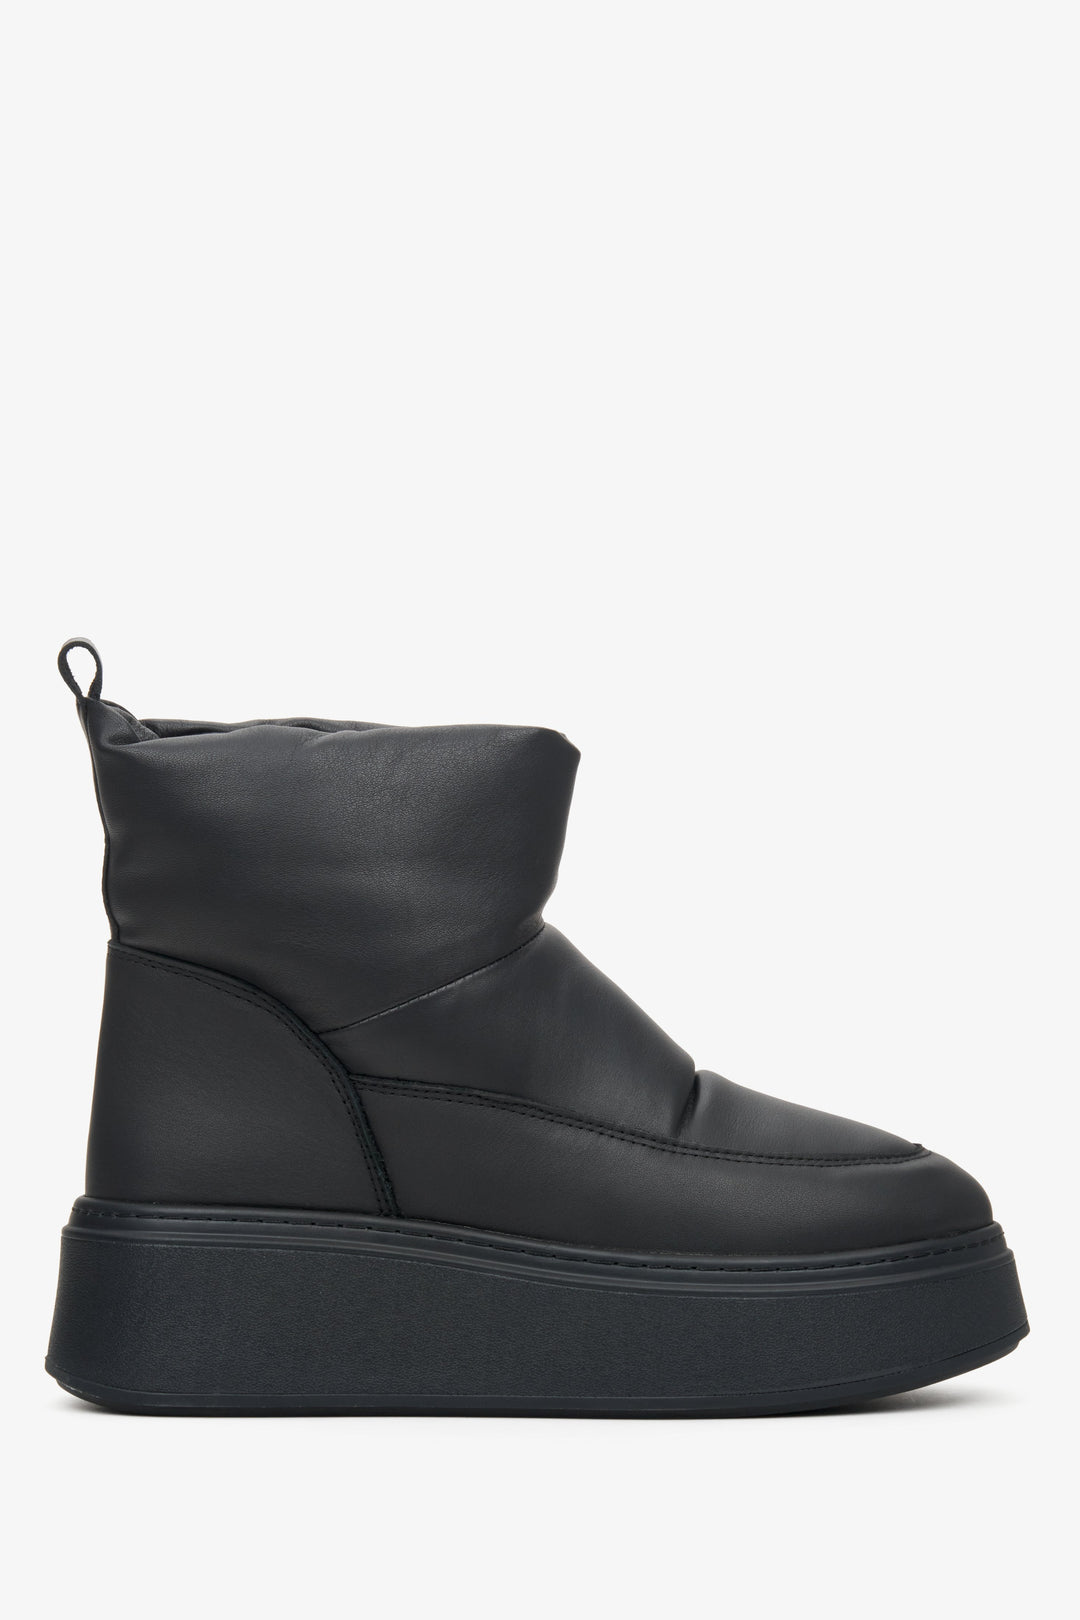 Women's Black Snow Boots made of Genuine Leather Estro ER00112252.